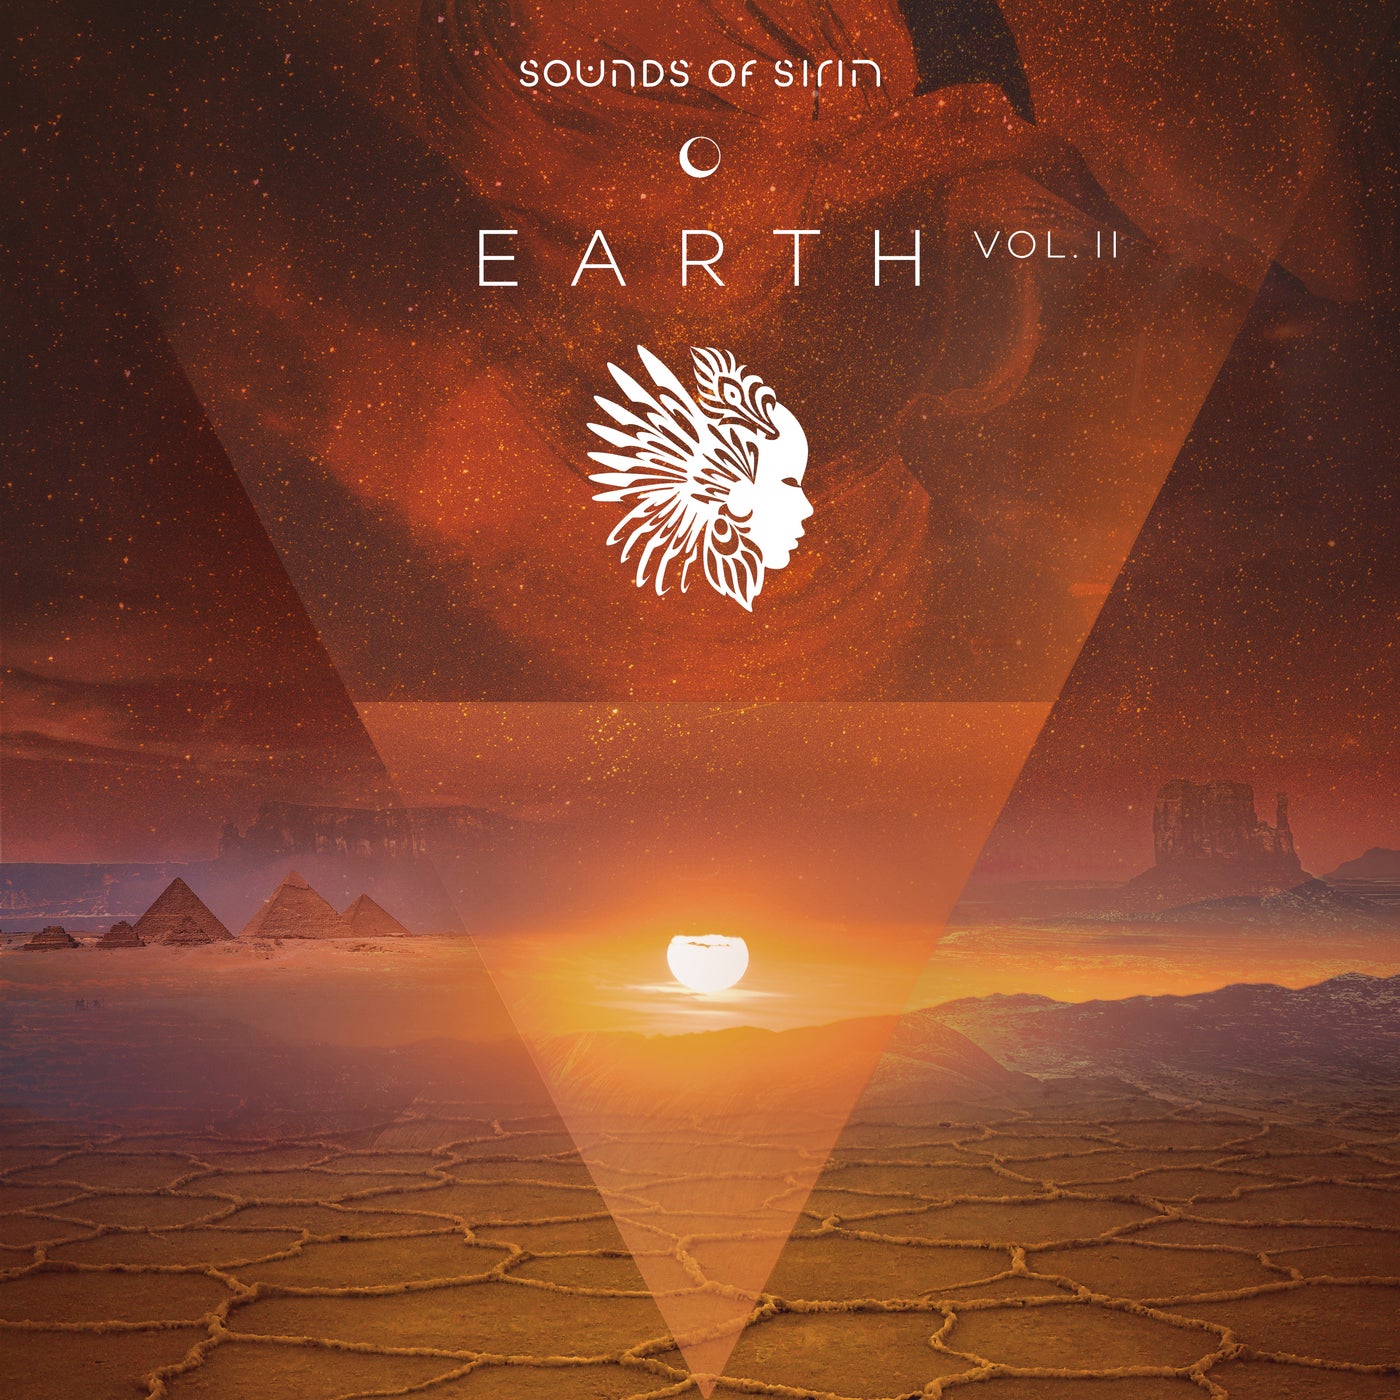 VA - Sounds of Sirin: Earth Vol. II [SIRIN040]